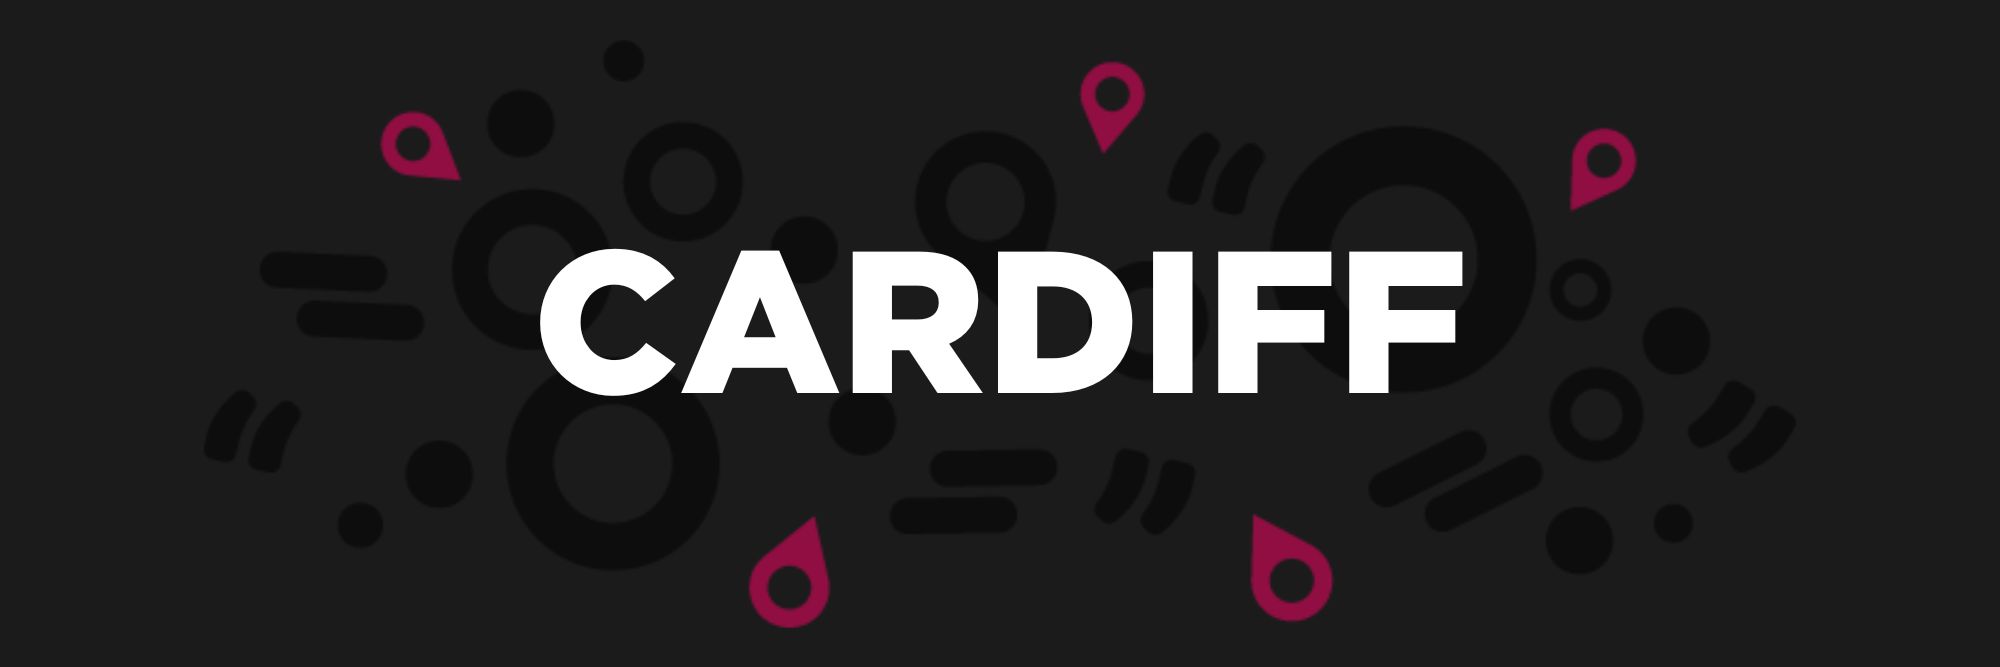 Cardiff-banner